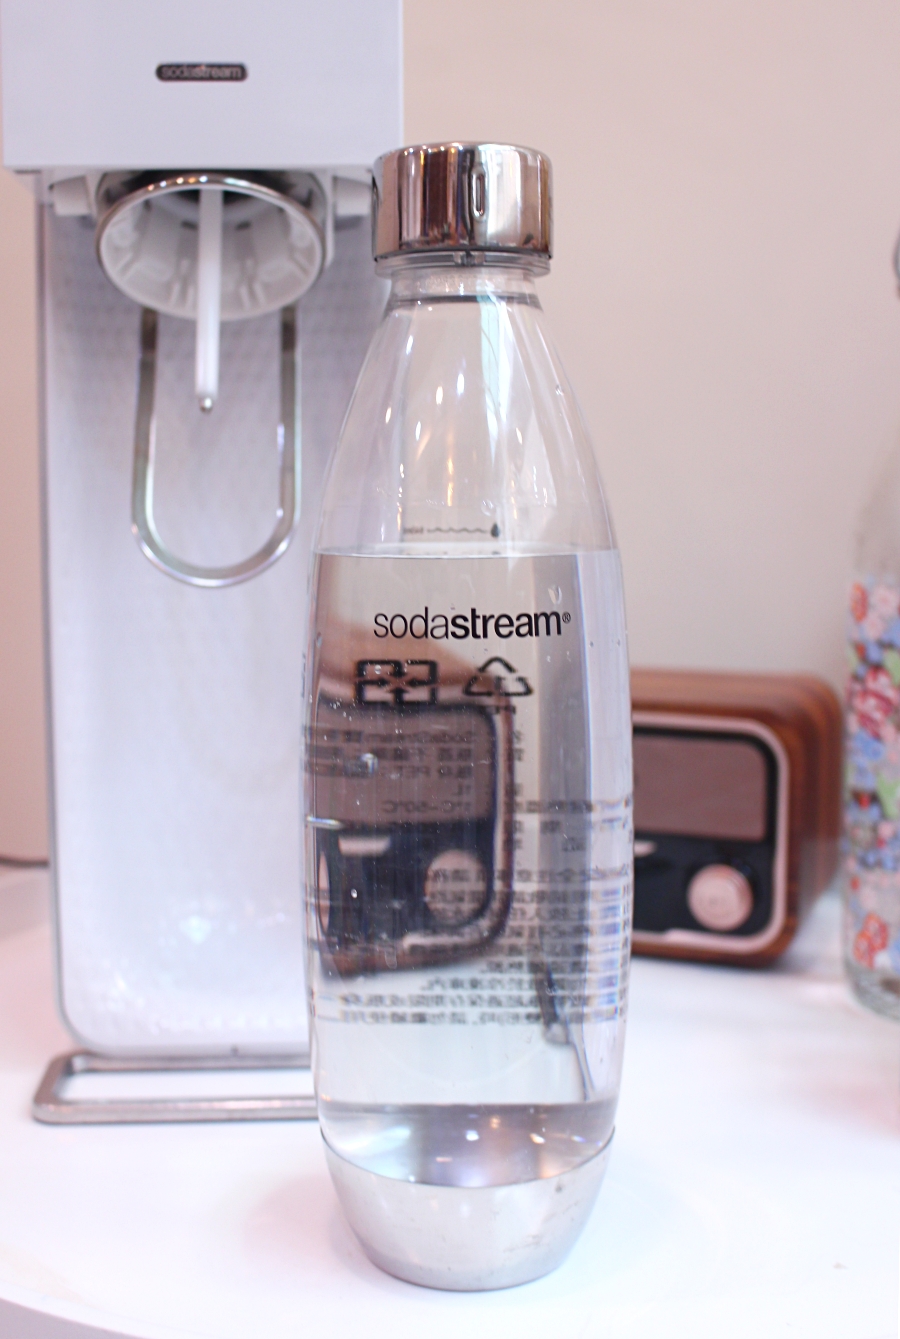 sodastream氣泡水機團購 power source氣泡水機1L水瓶